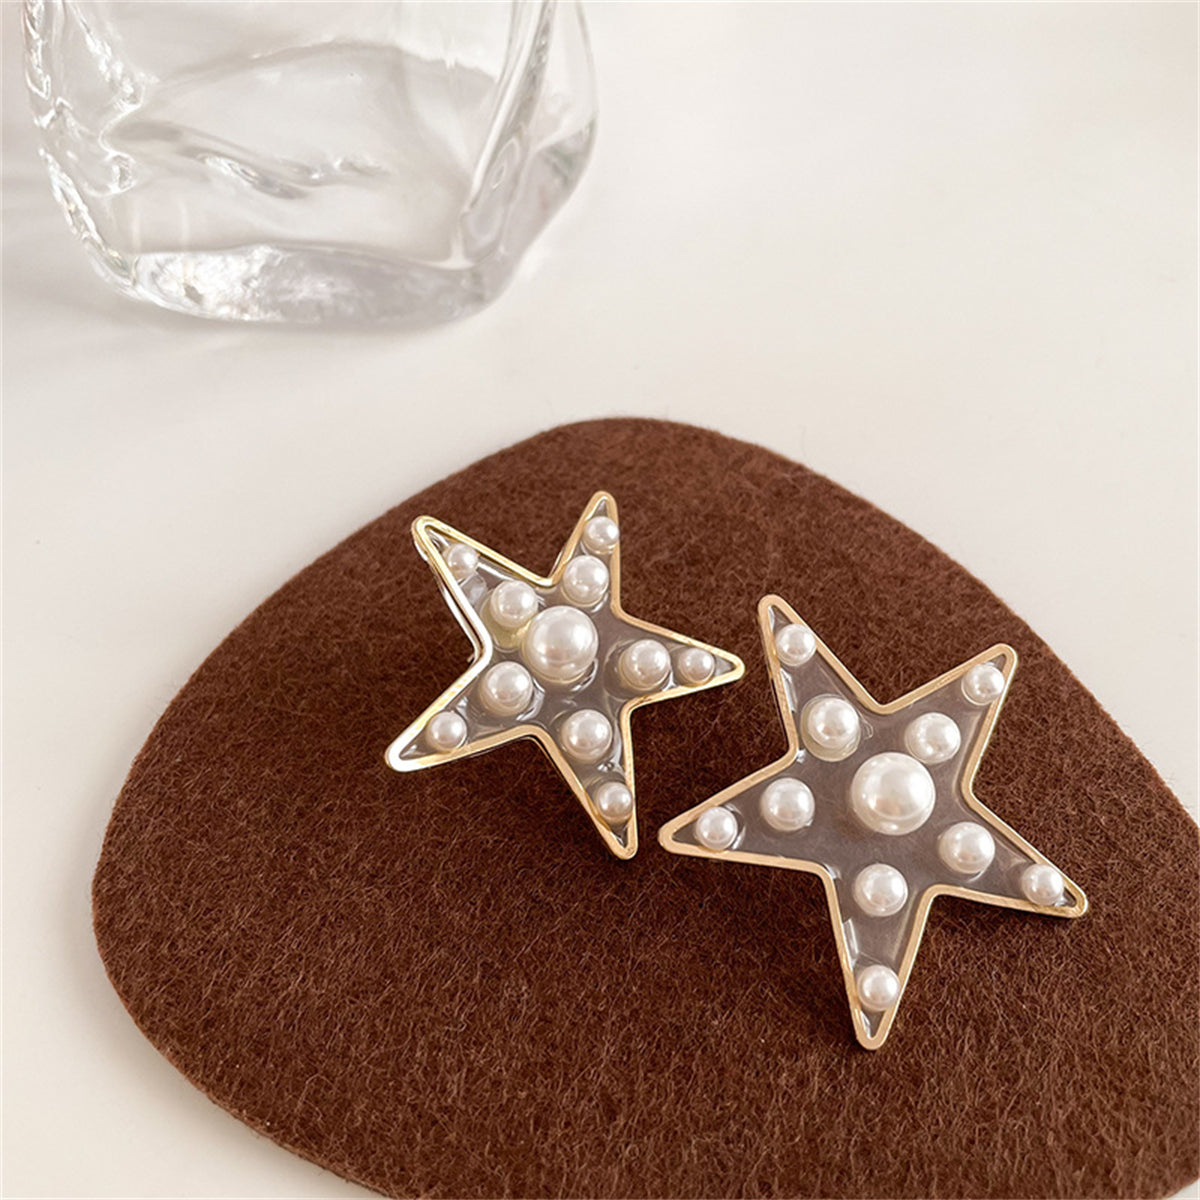 Pearl & Resin 18K Gold-Plated Star Drop Earrings